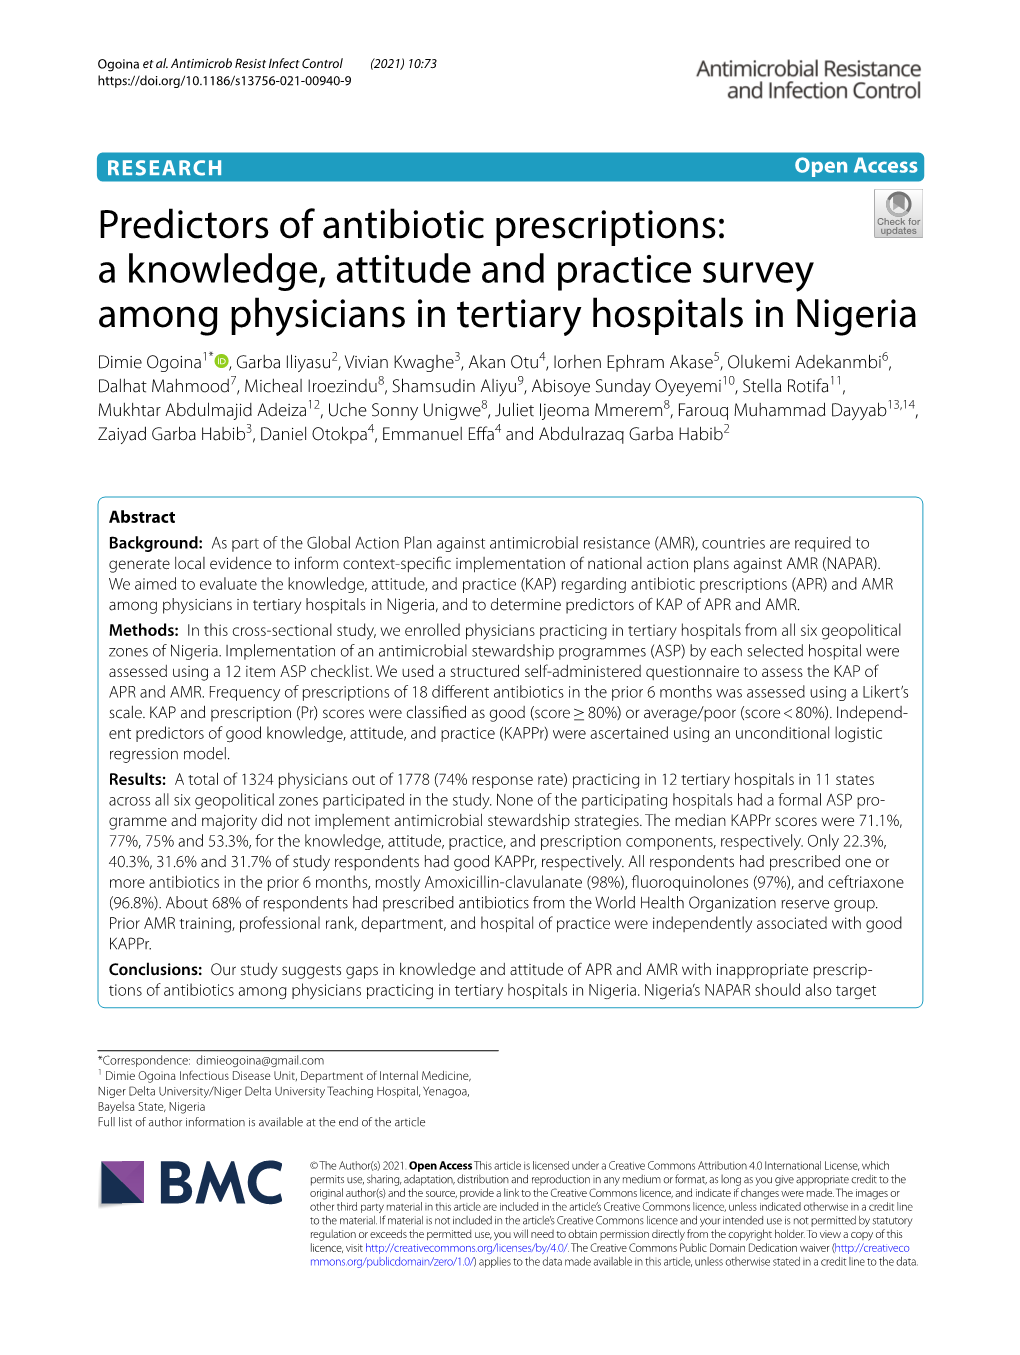 Predictors of Antibiotic Prescriptions: a Knowledge, Attitude and Practice